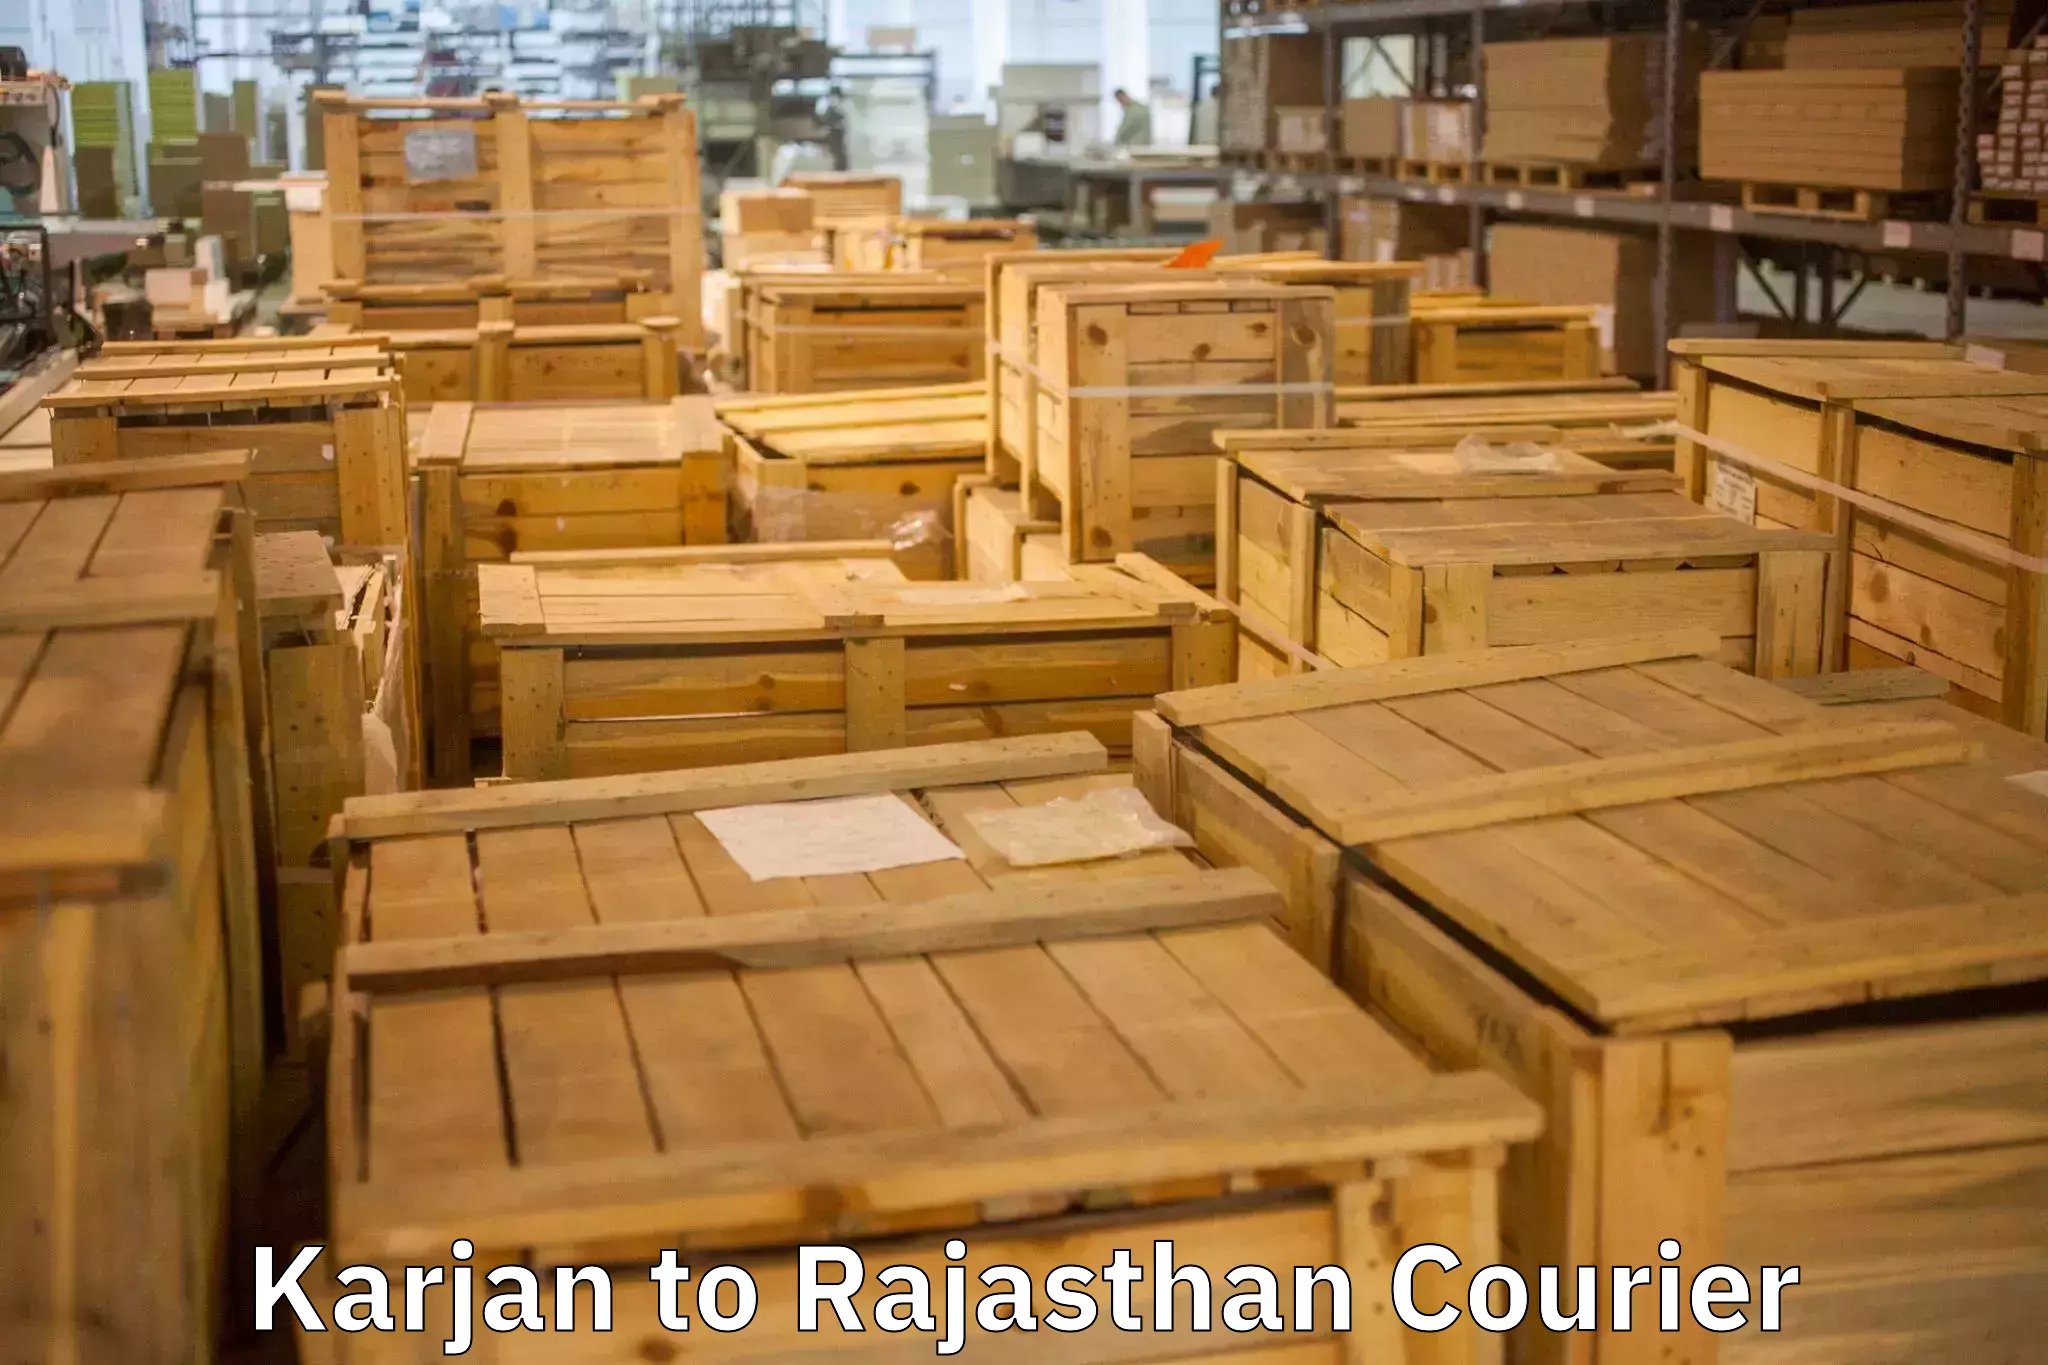 Professional moving company Karjan to Bassi